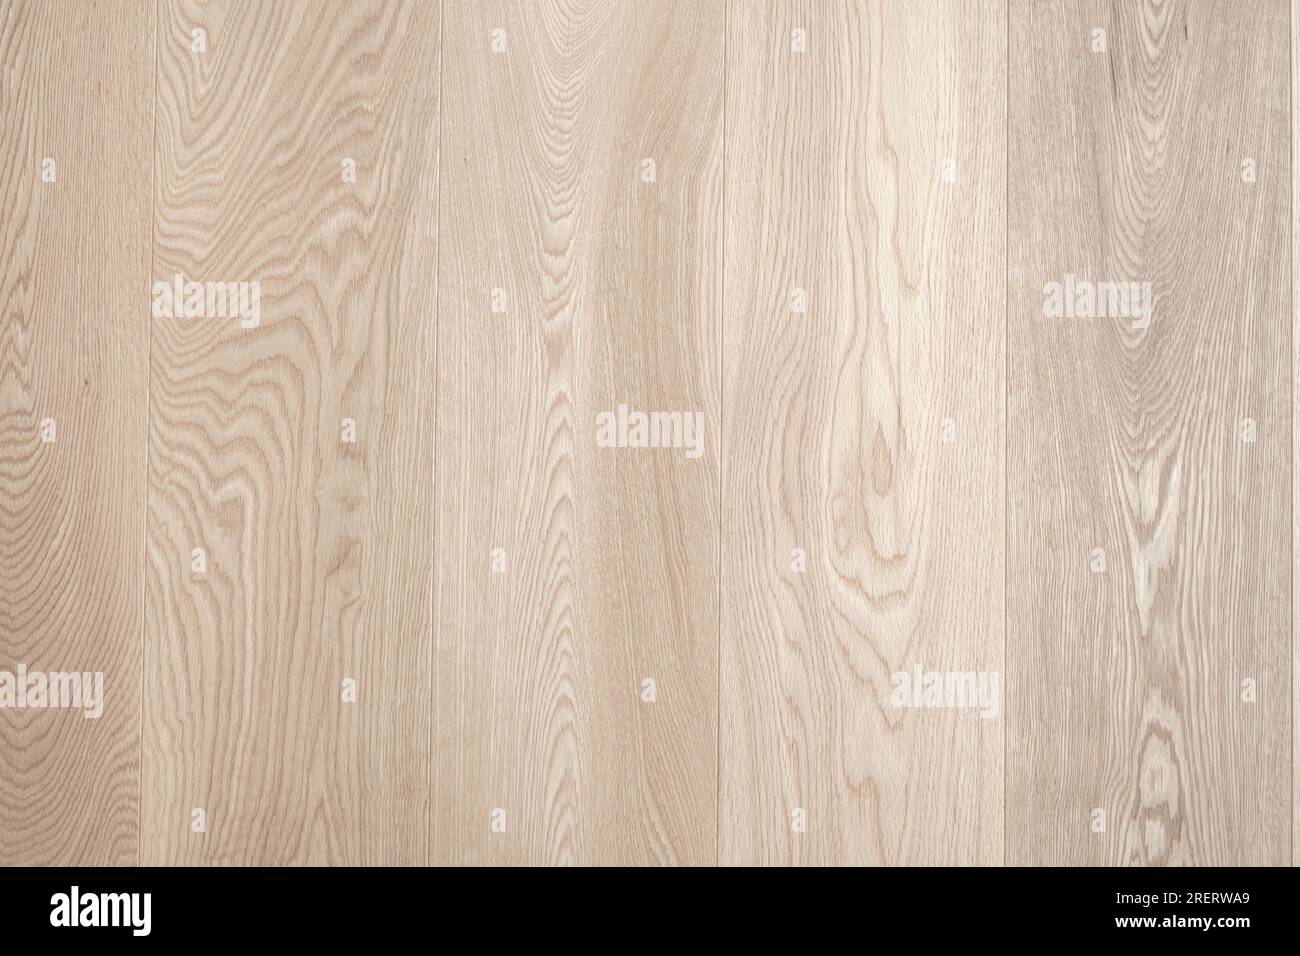 bleached, white parquet floor, bright wooden floor Stock Photo